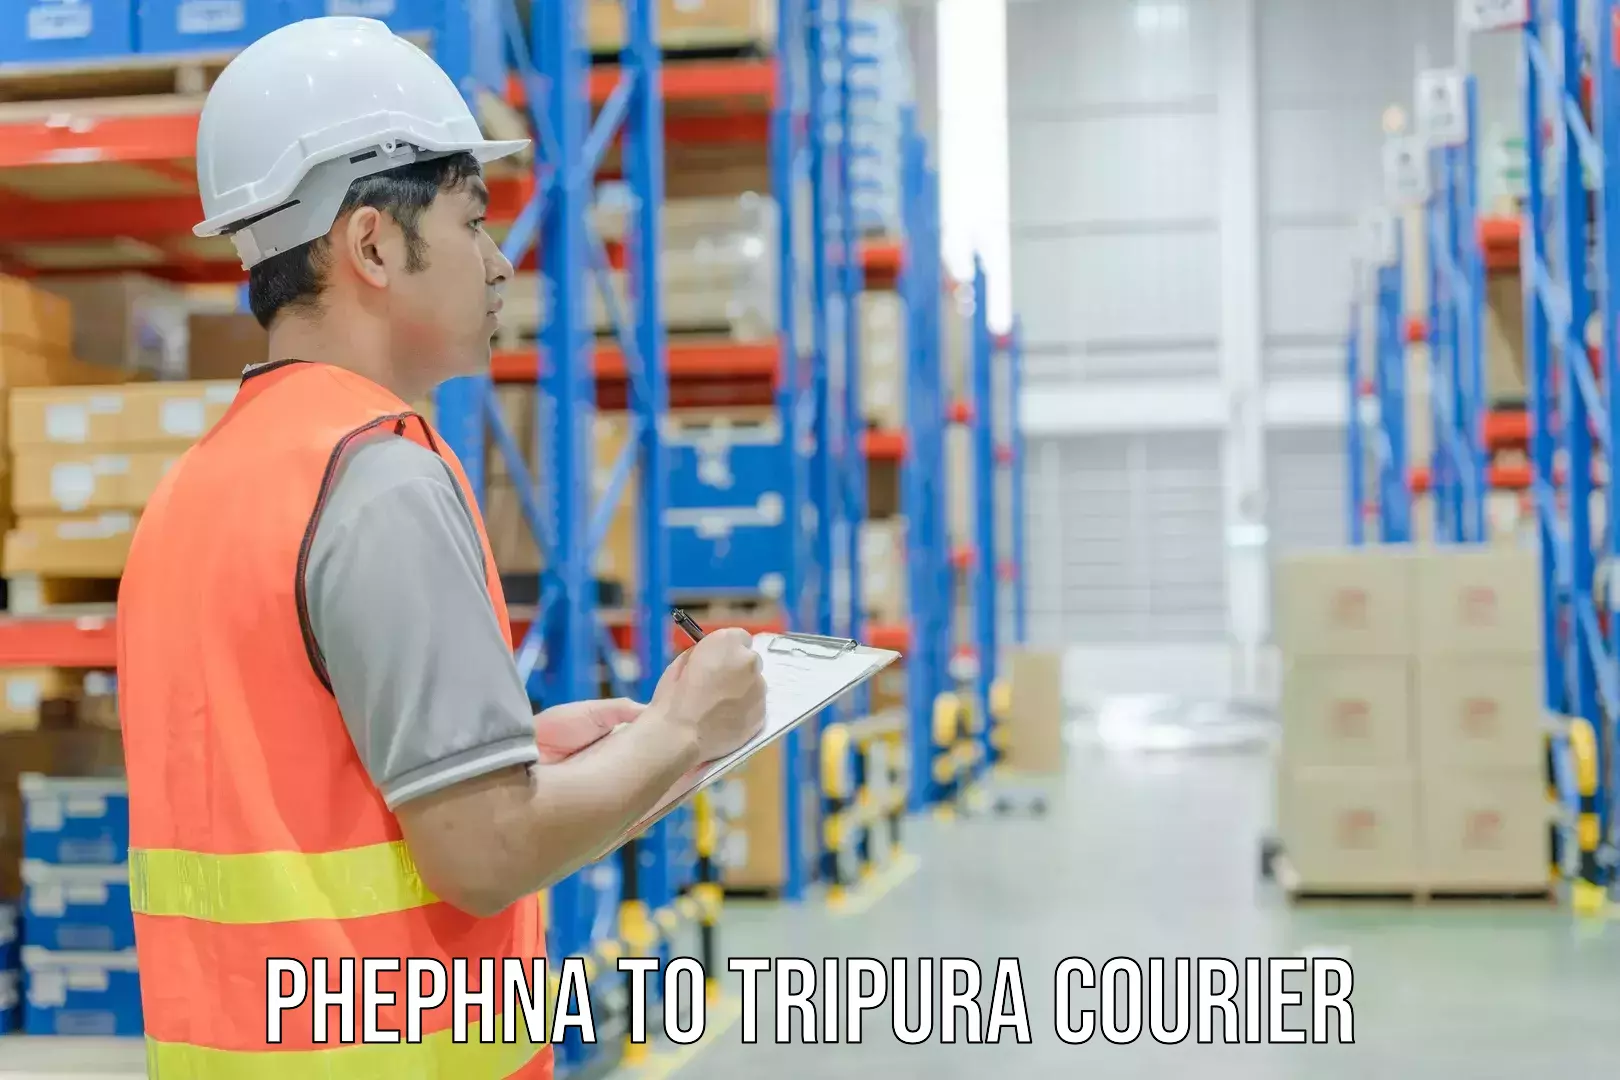 Courier service partnerships Phephna to Tripura